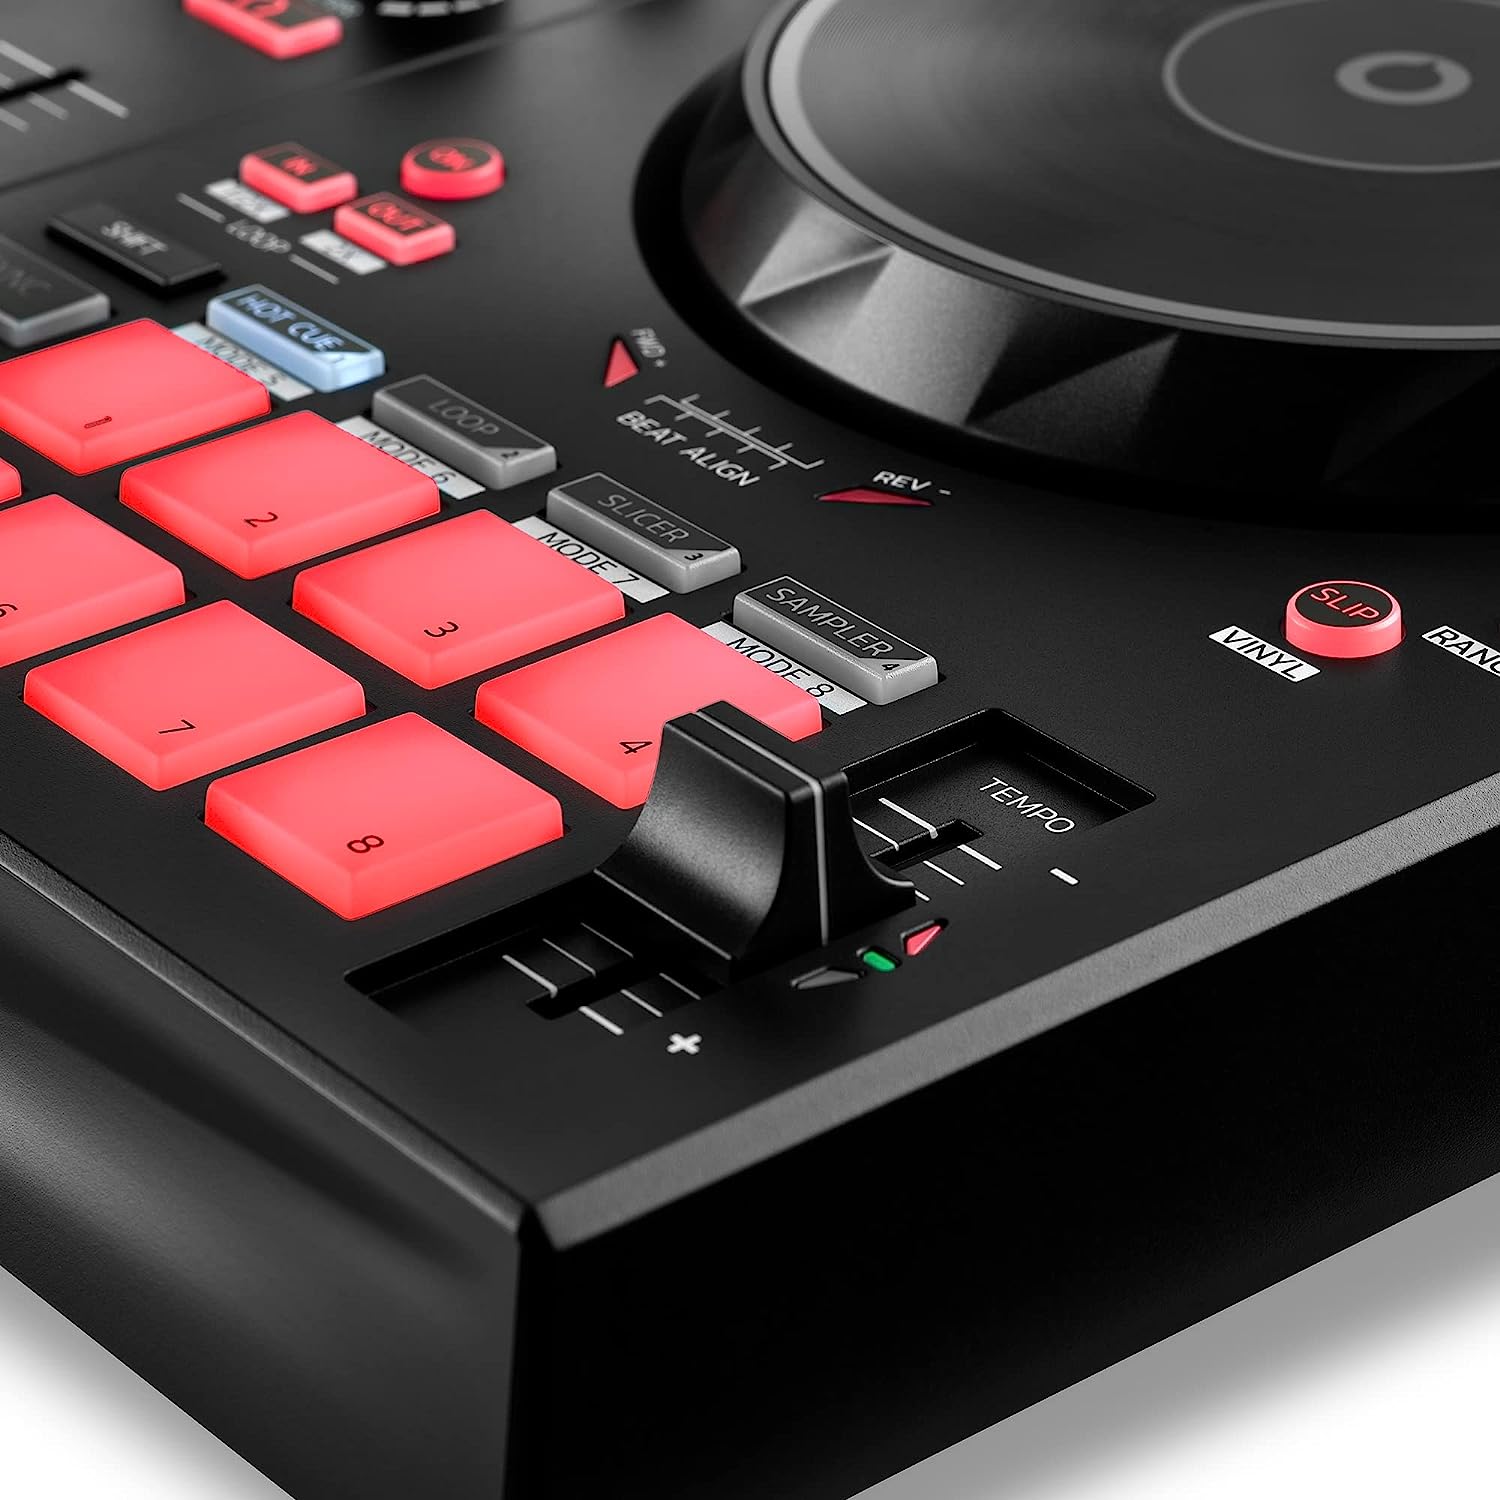 USB Sound 300 Town, decks Inpulse Inc DJControl DJ – 2 MK2 – with Hercules – controller